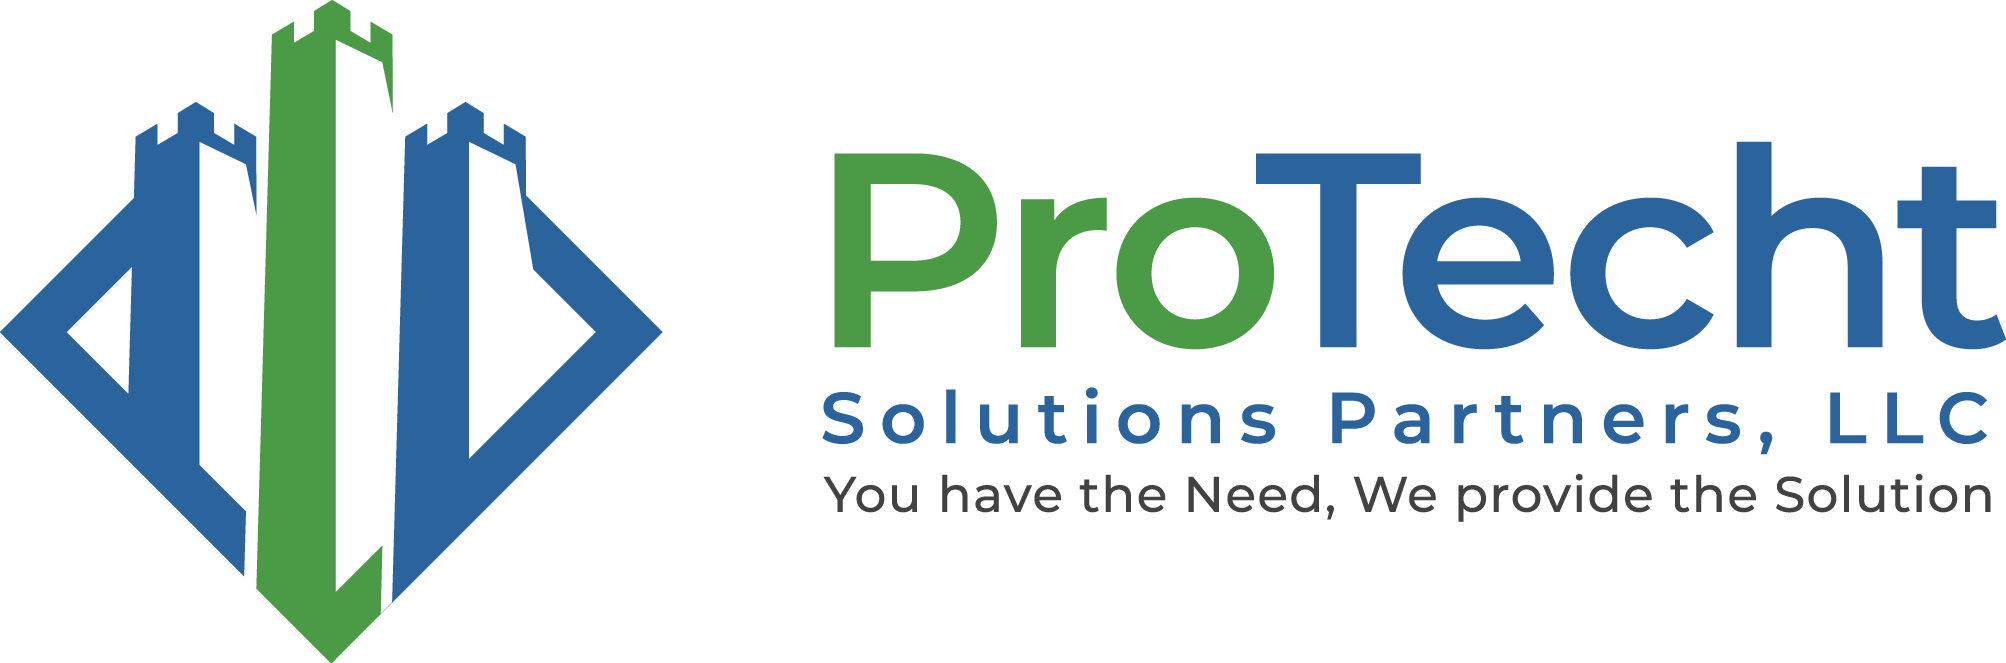 Protecht-Solution-Partners-LLC-1-1